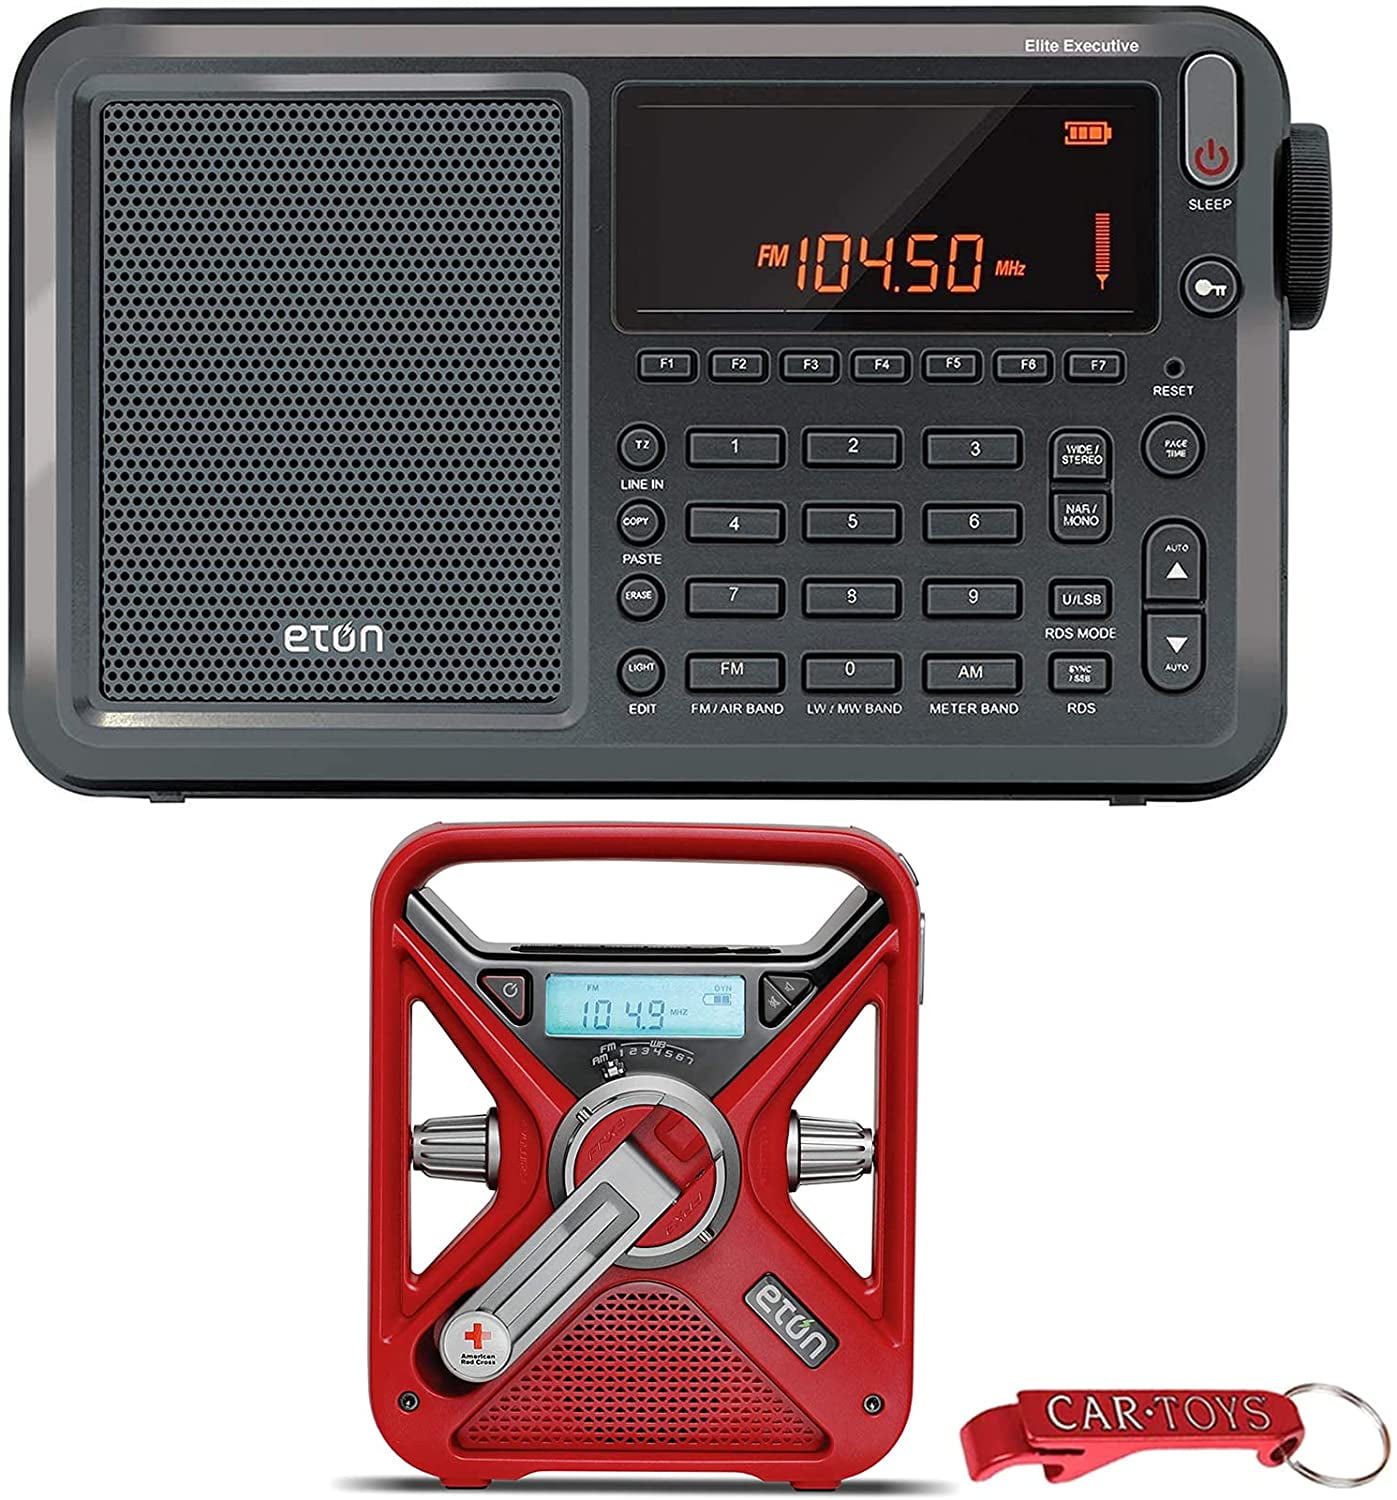 Elenco Electronic Shortwave Radio Kit Elex0899 for sale online 